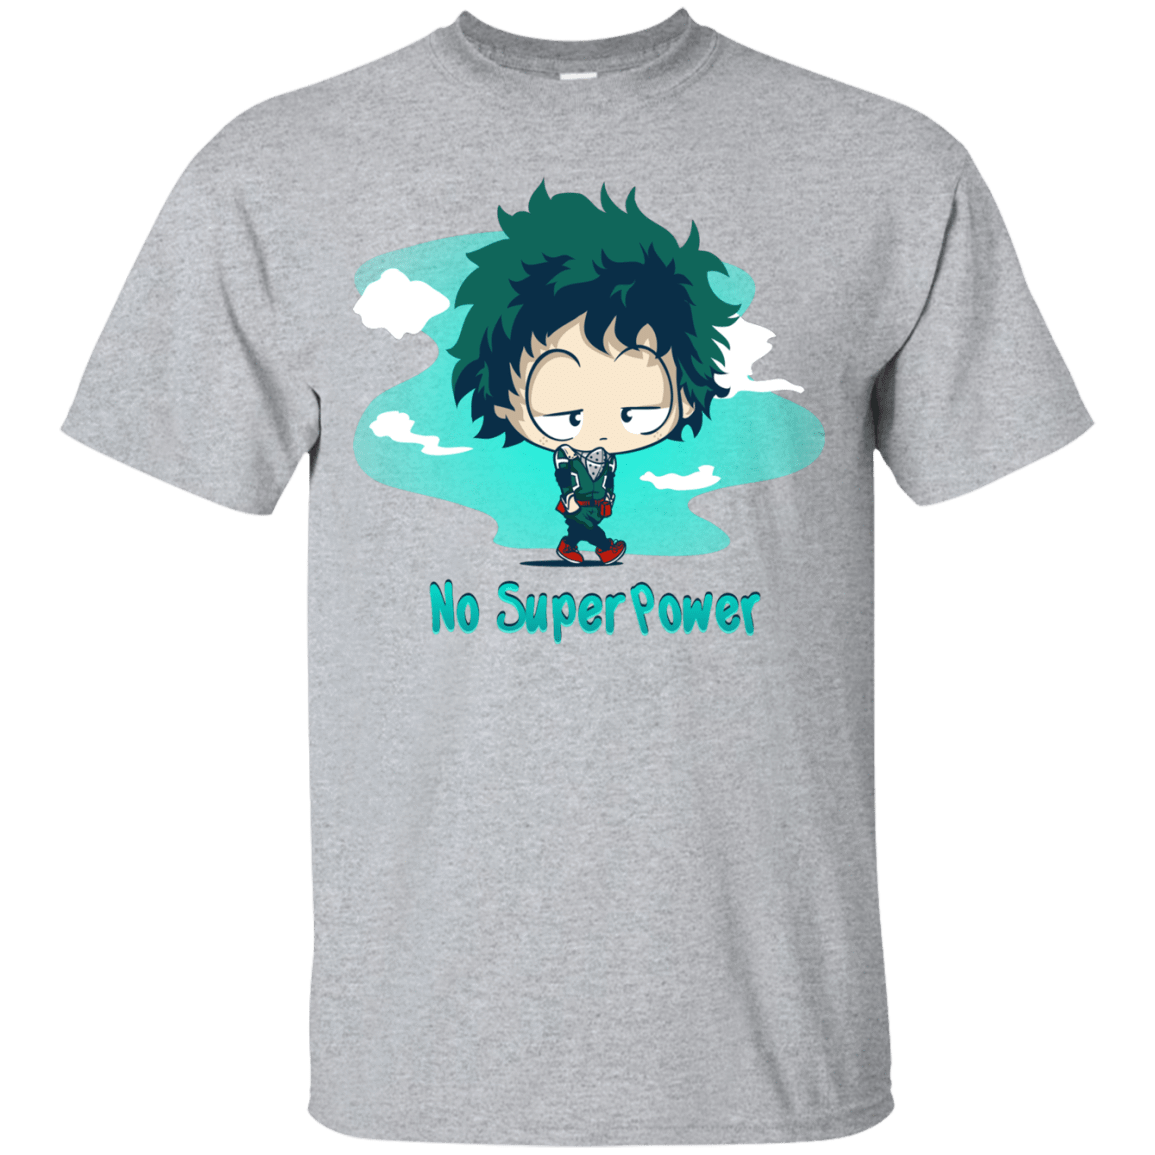 T-Shirts Sport Grey / S No Super Power T-Shirt